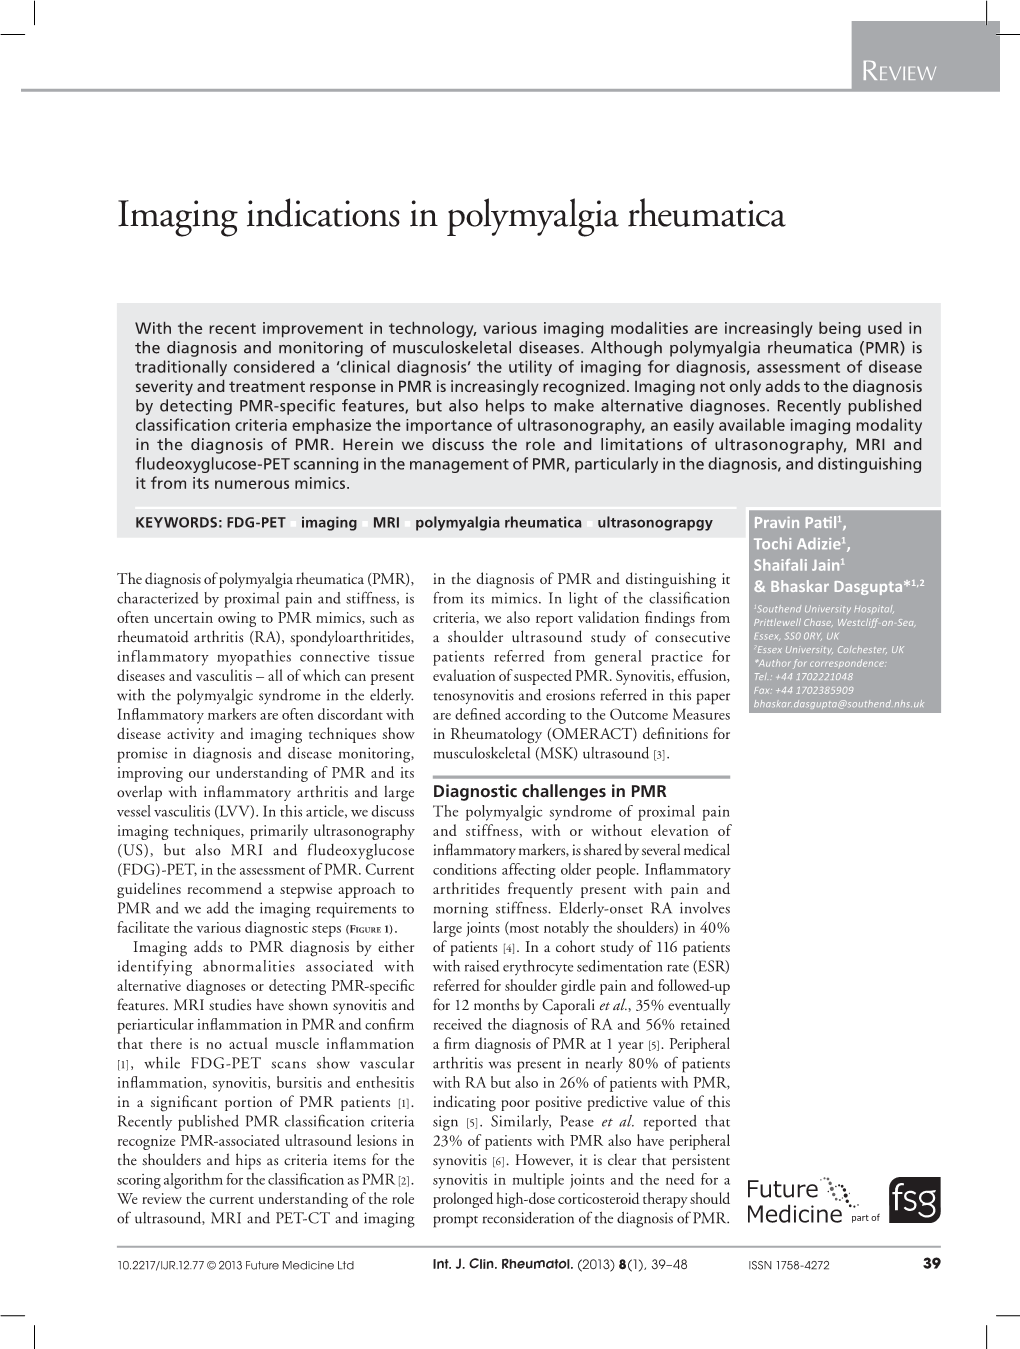 Imaging Indications in Polymyalgia Rheumatica